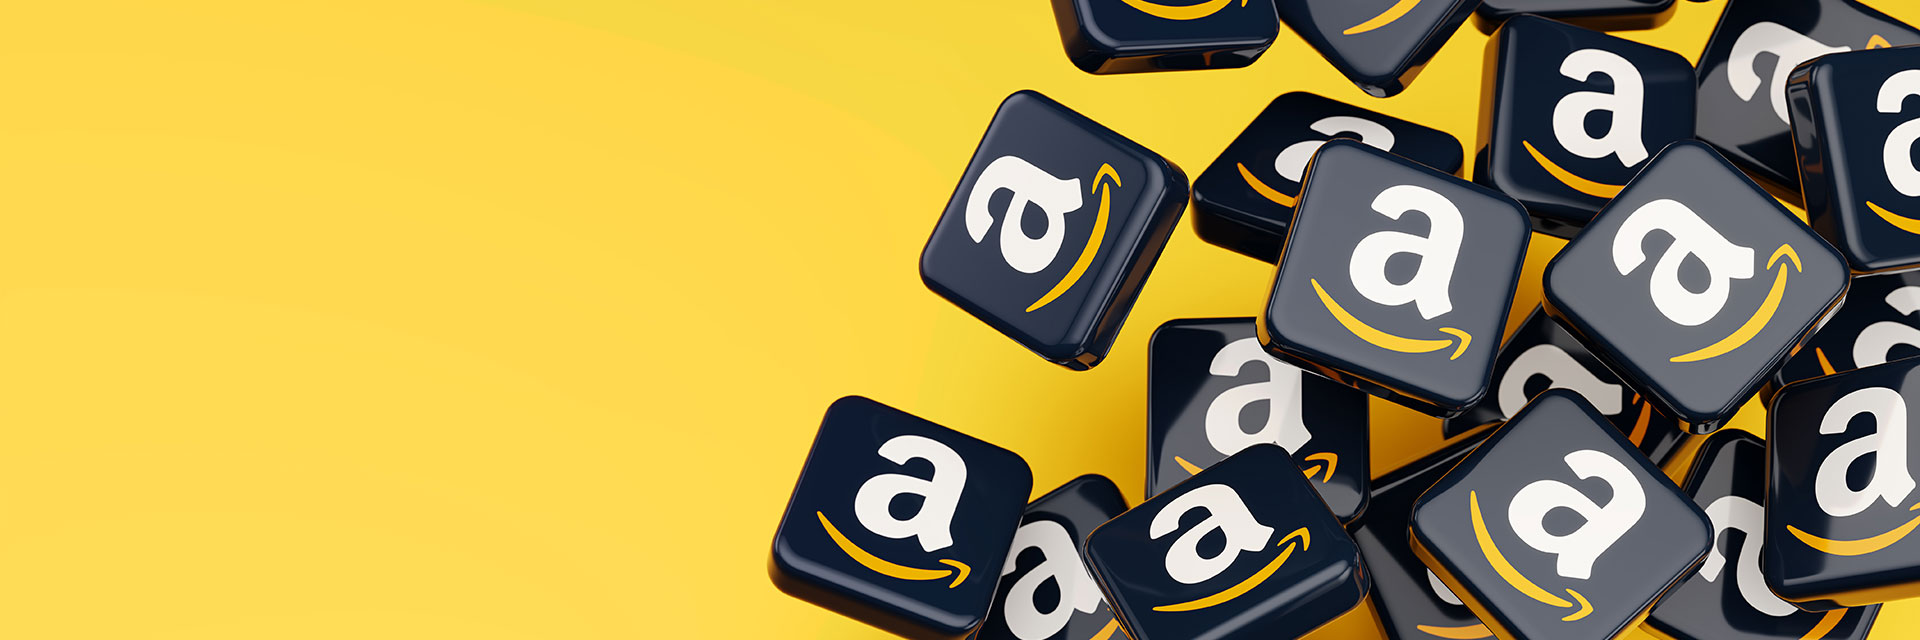 Tiles with Amazon logo and yellow background